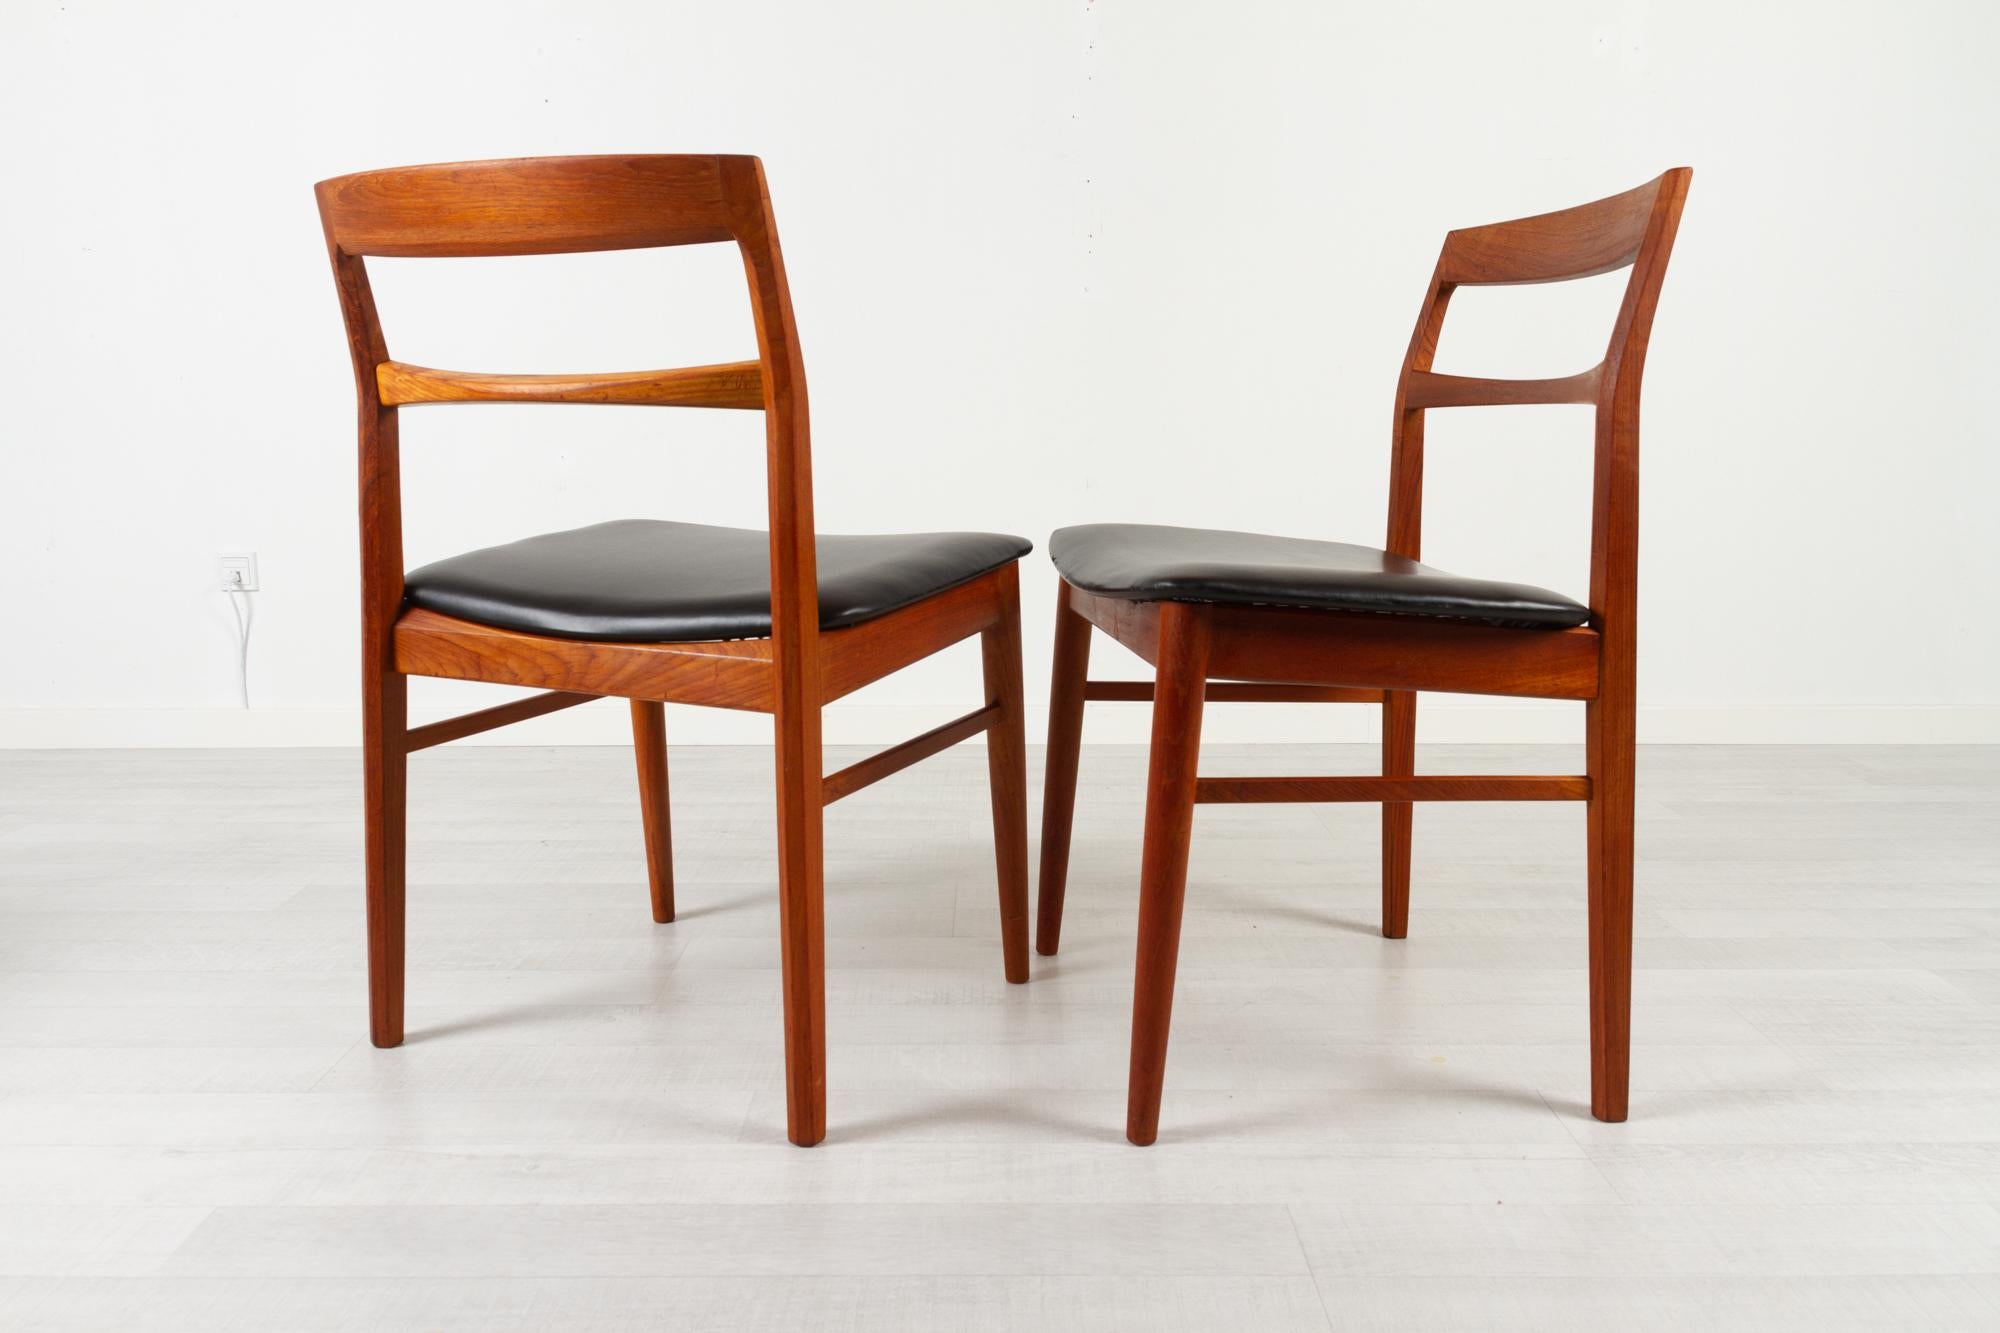 Vintage Danish Teak Dining Chairs by Kjærnulf for Vejle Møbelfabrik, 1960s For Sale 3